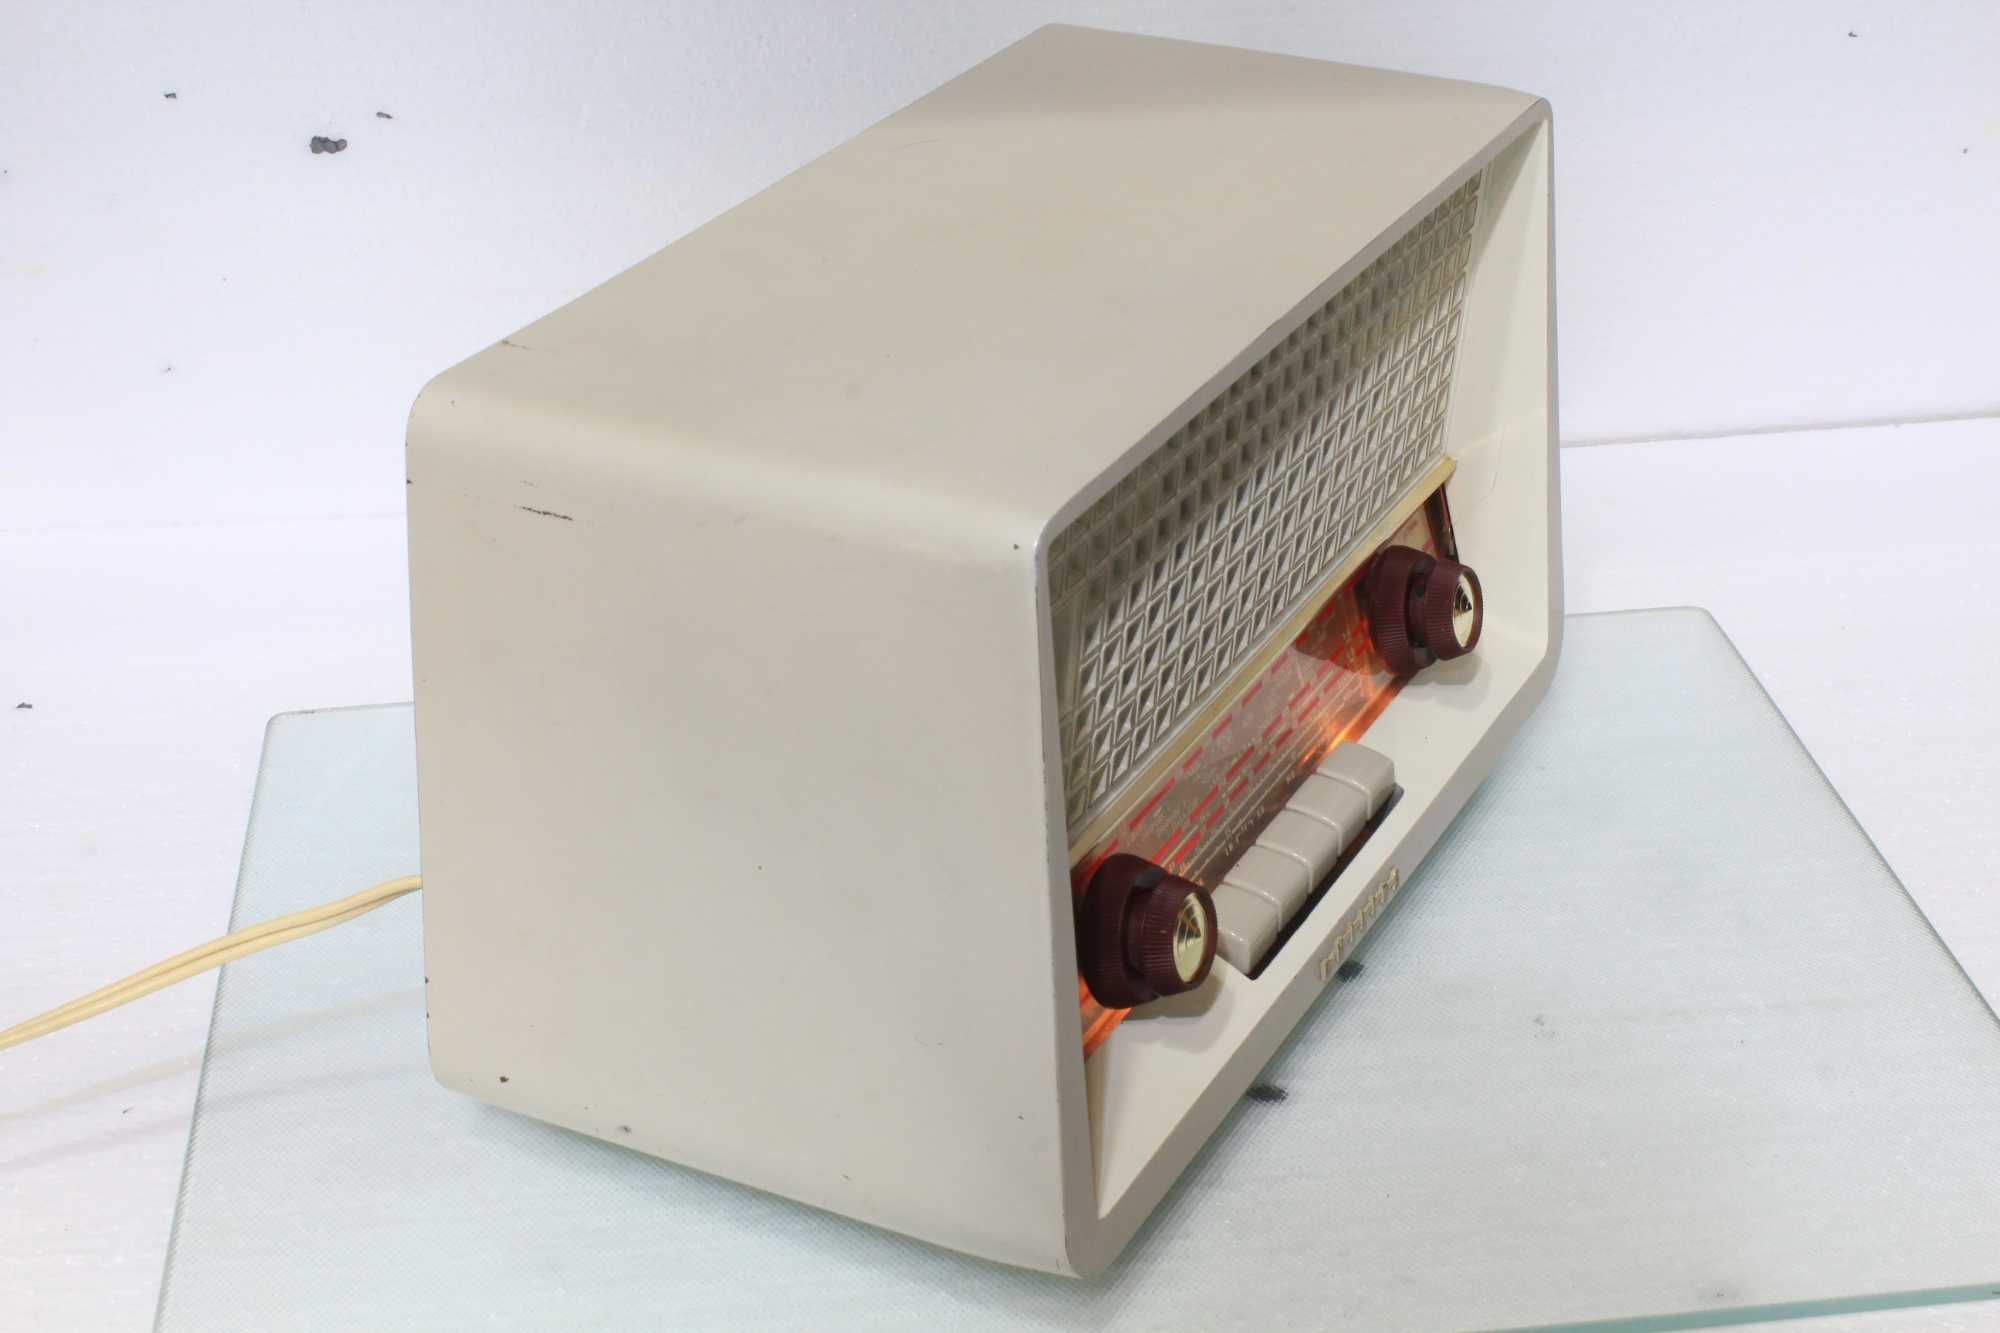 Radio lampi Philips(1958-1959).